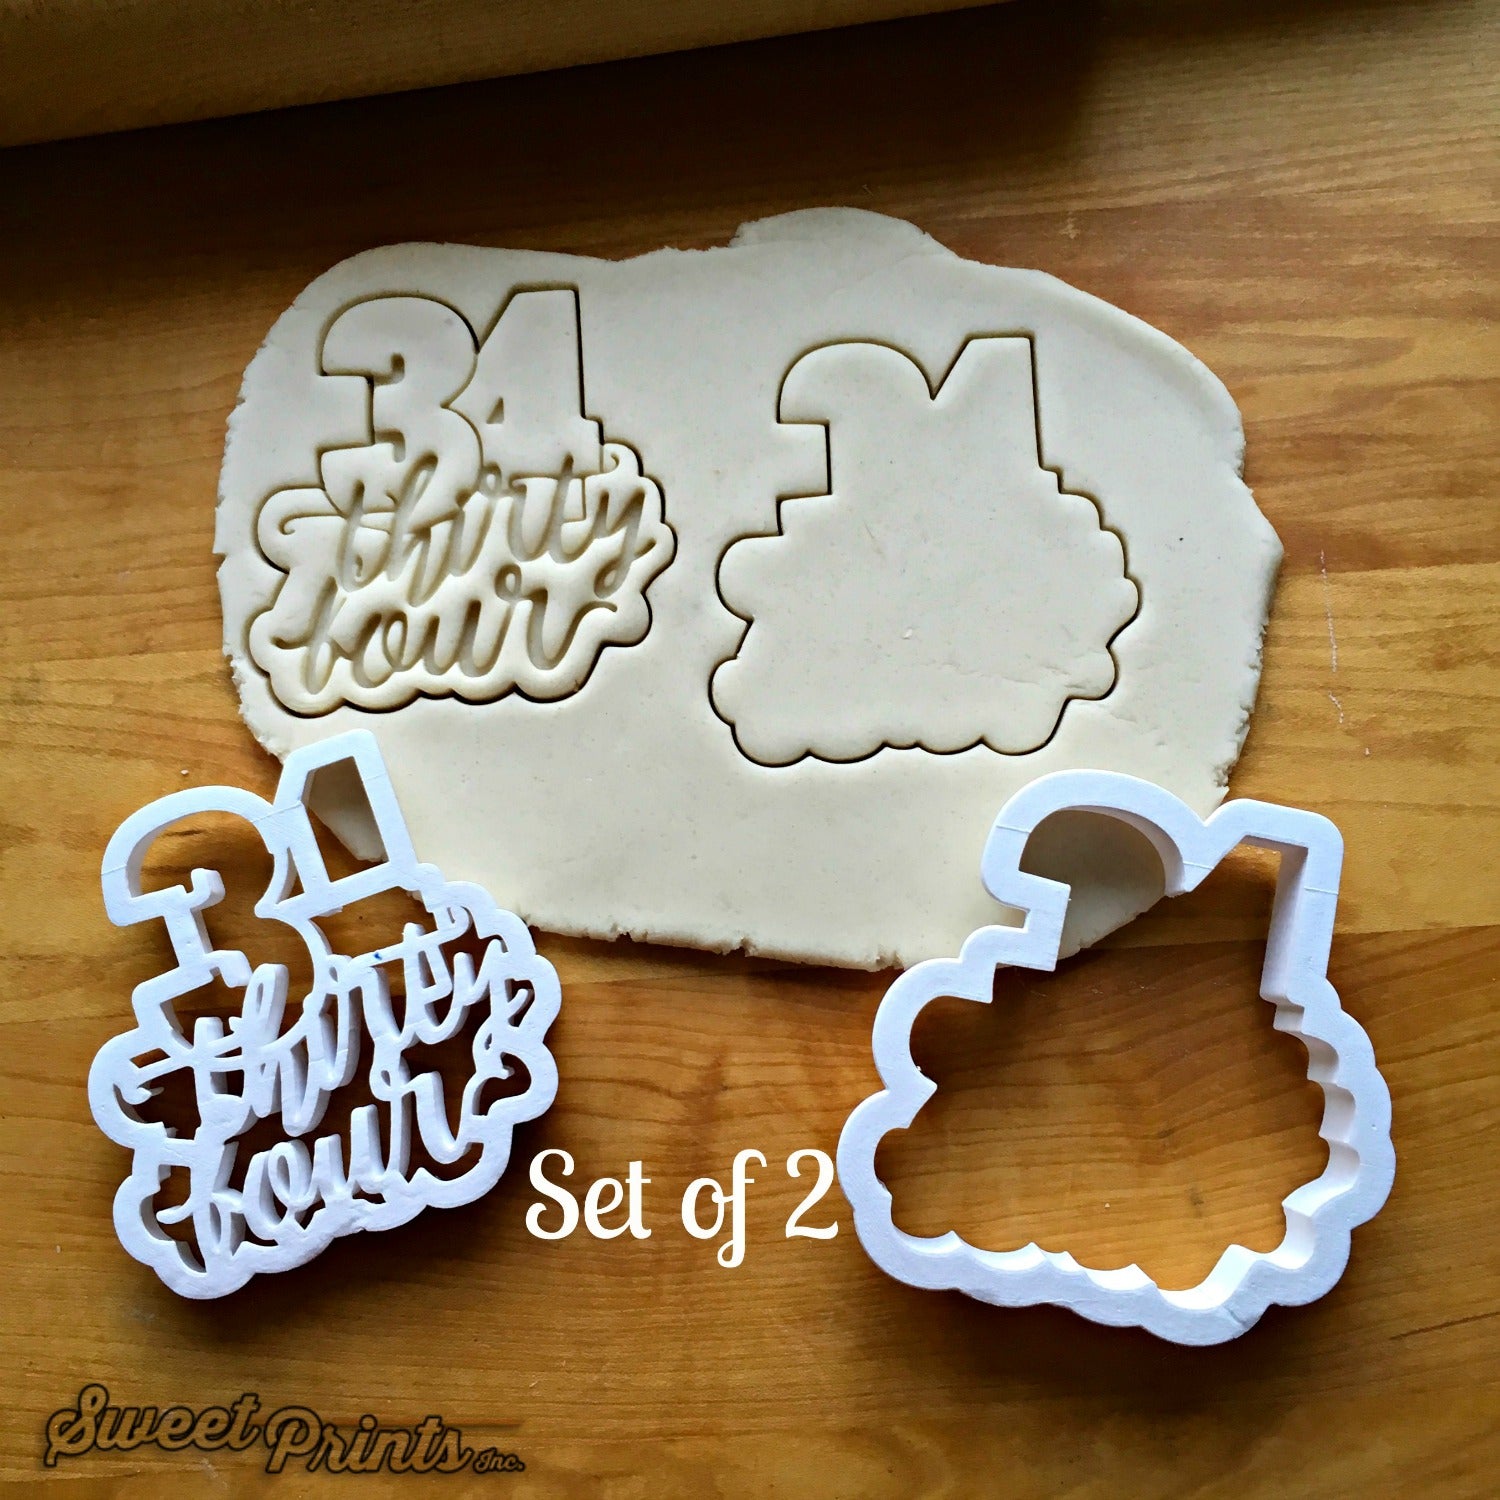 Set of 2 Lettered Number 34 Cookie Cutters/Dishwasher Safe